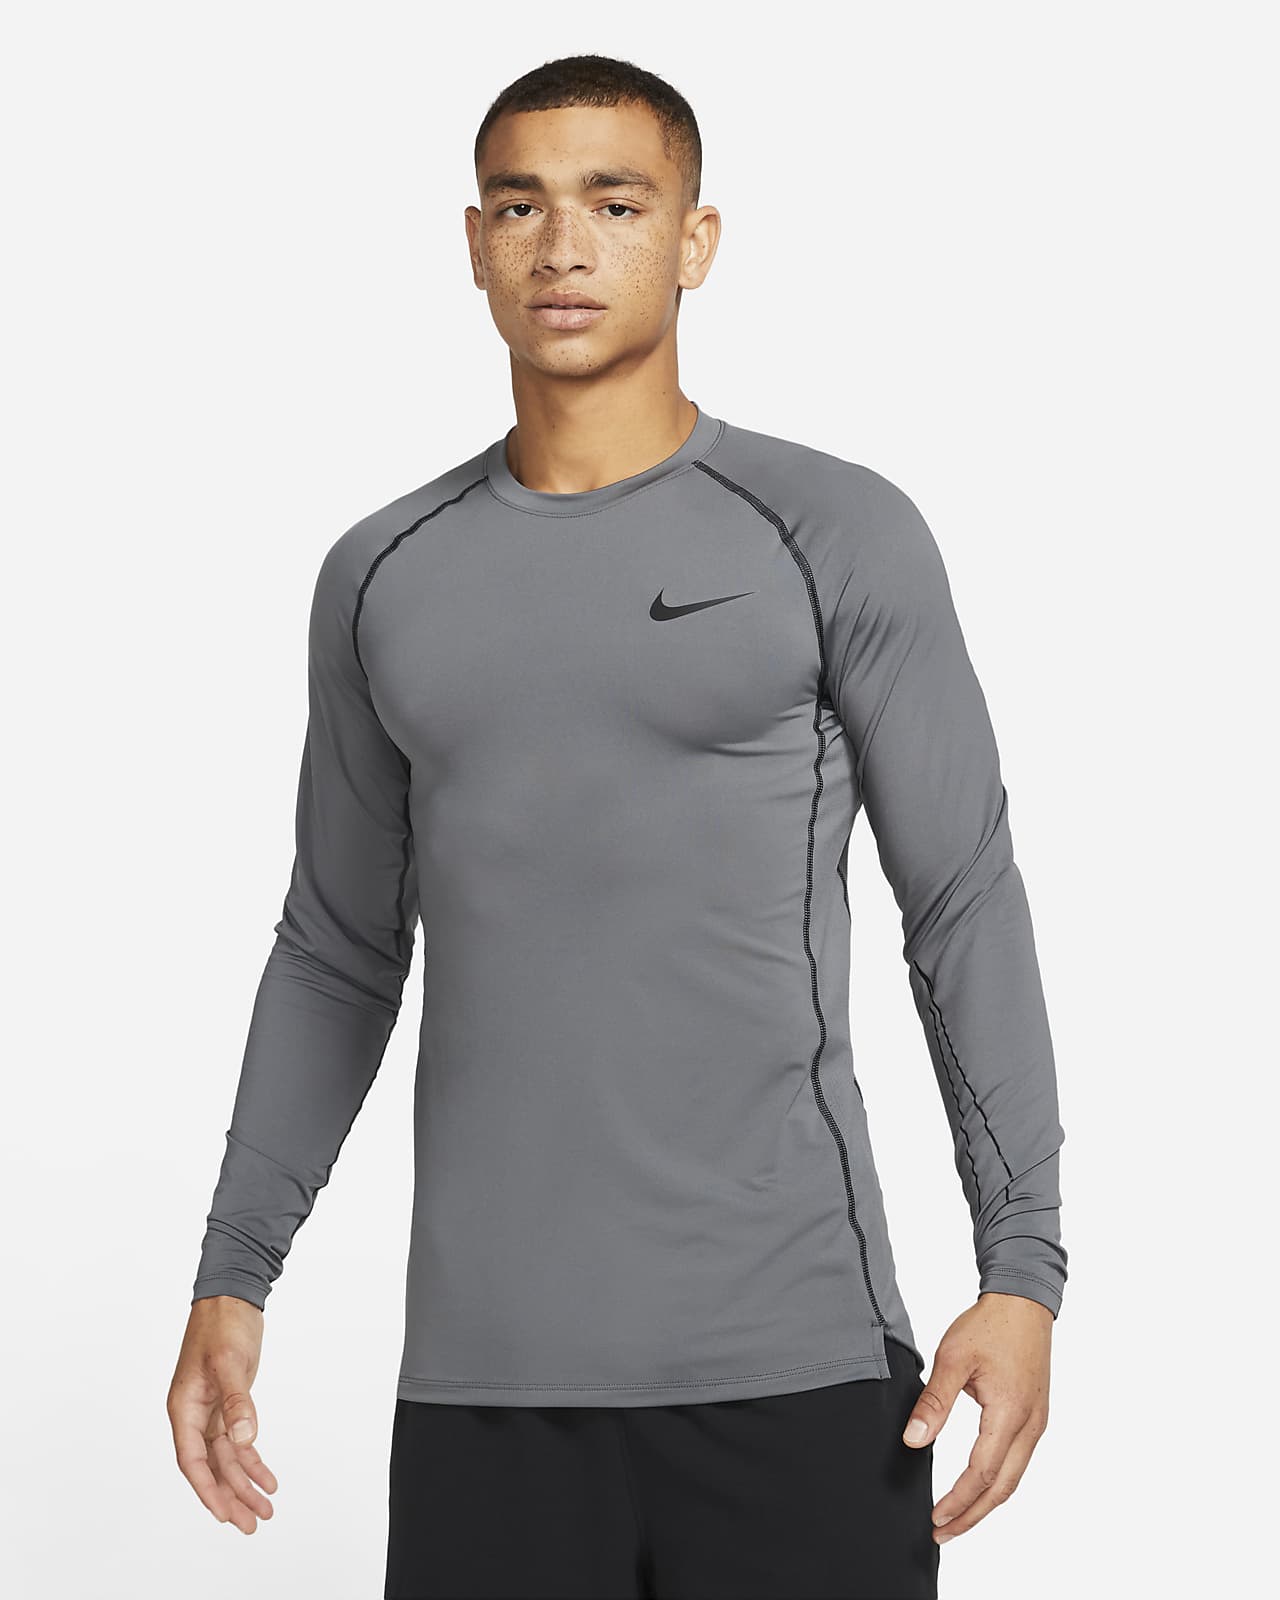 Nike Dri-FIT Men's Slim Fit Long-Sleeve